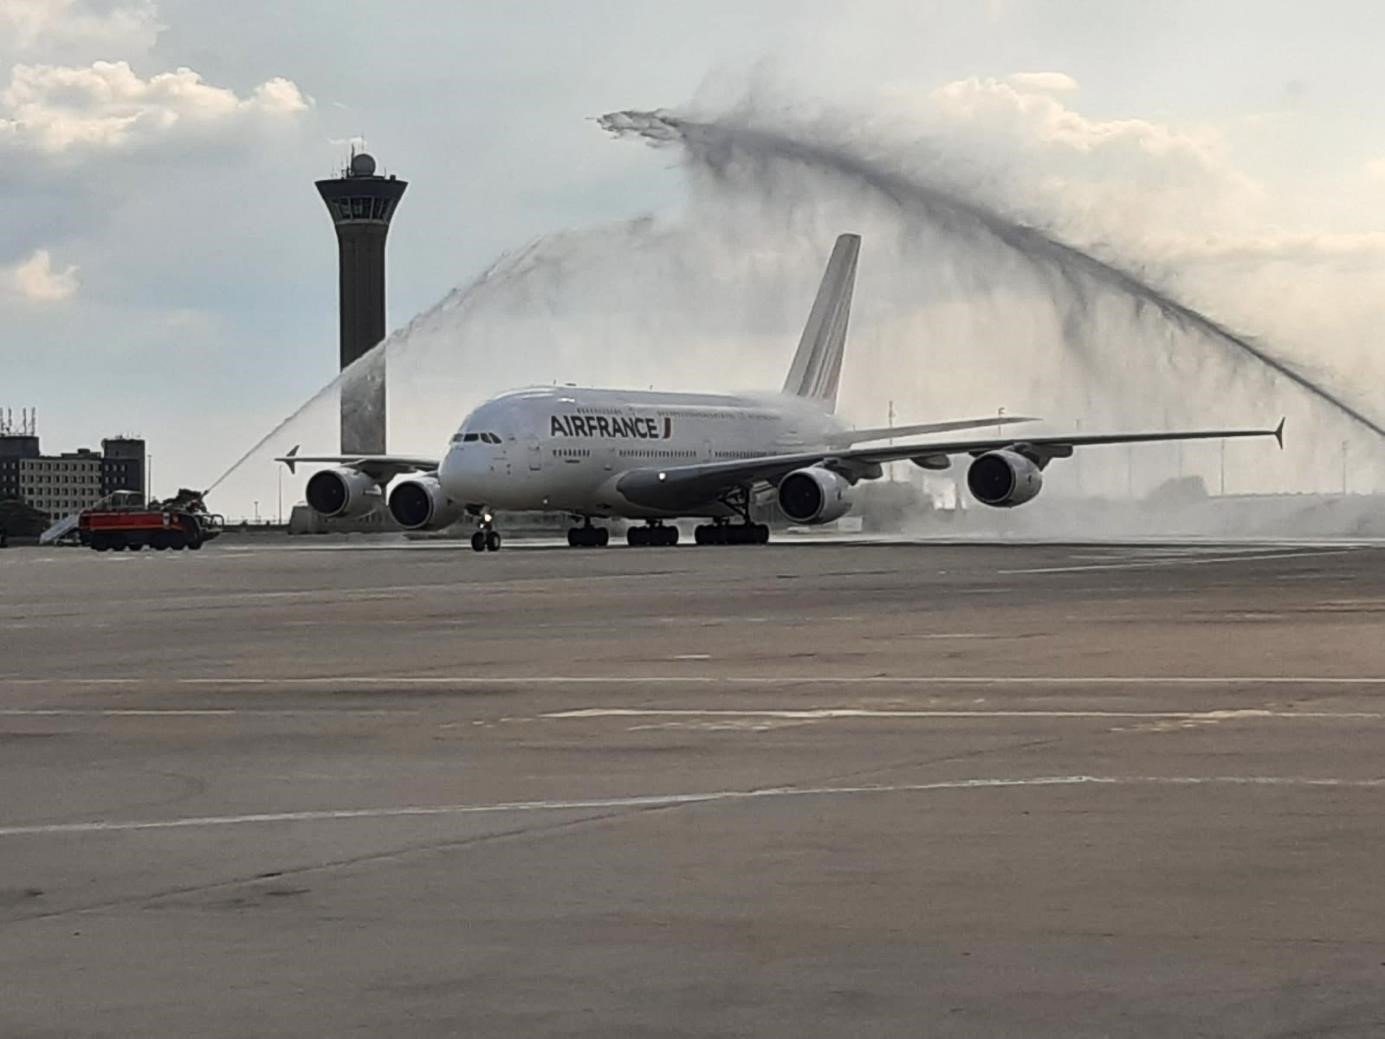 Air France bids adieu to flagship A380 with farewell flight